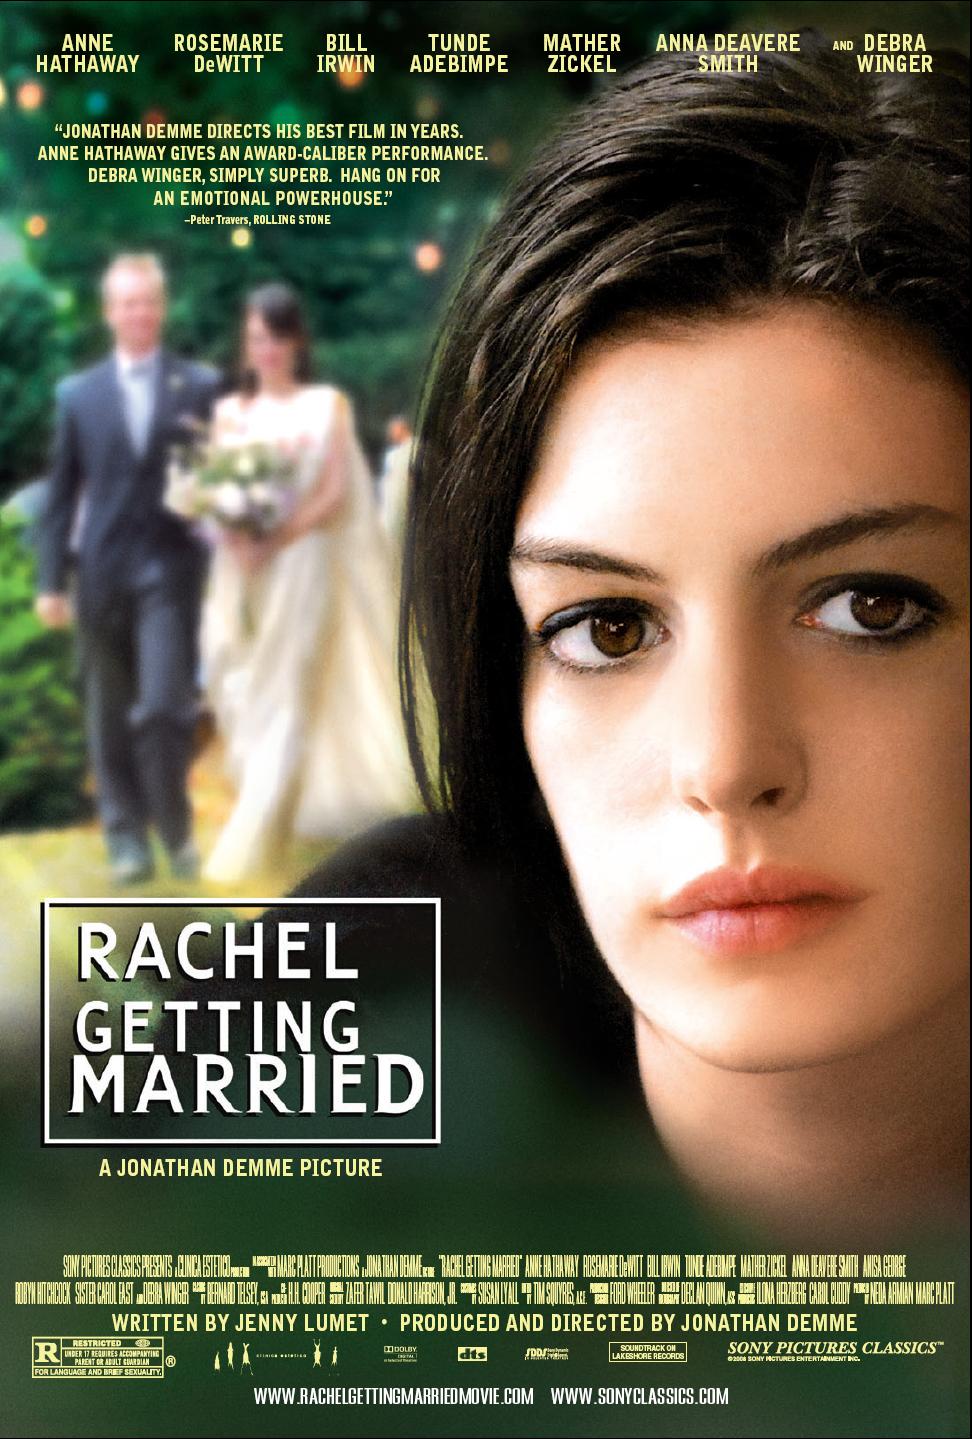 Anne Hathaway in Rachel Getting Married